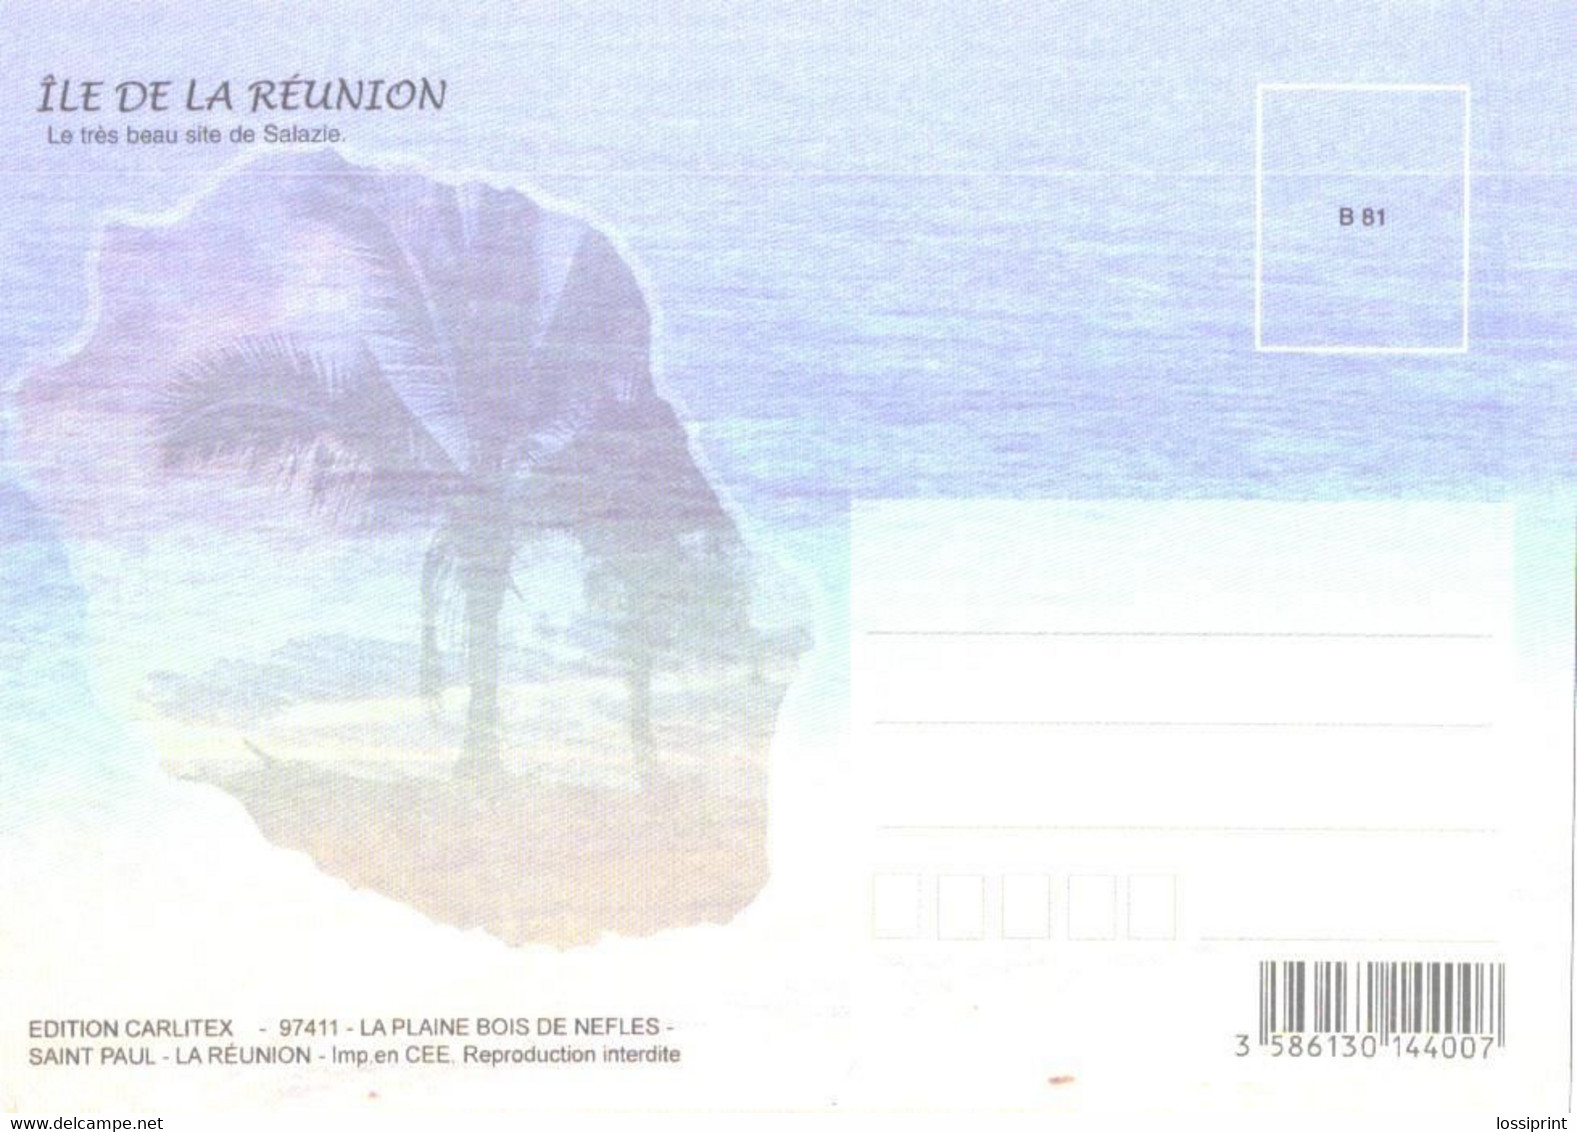 Reunion Island:Overview - Réunion